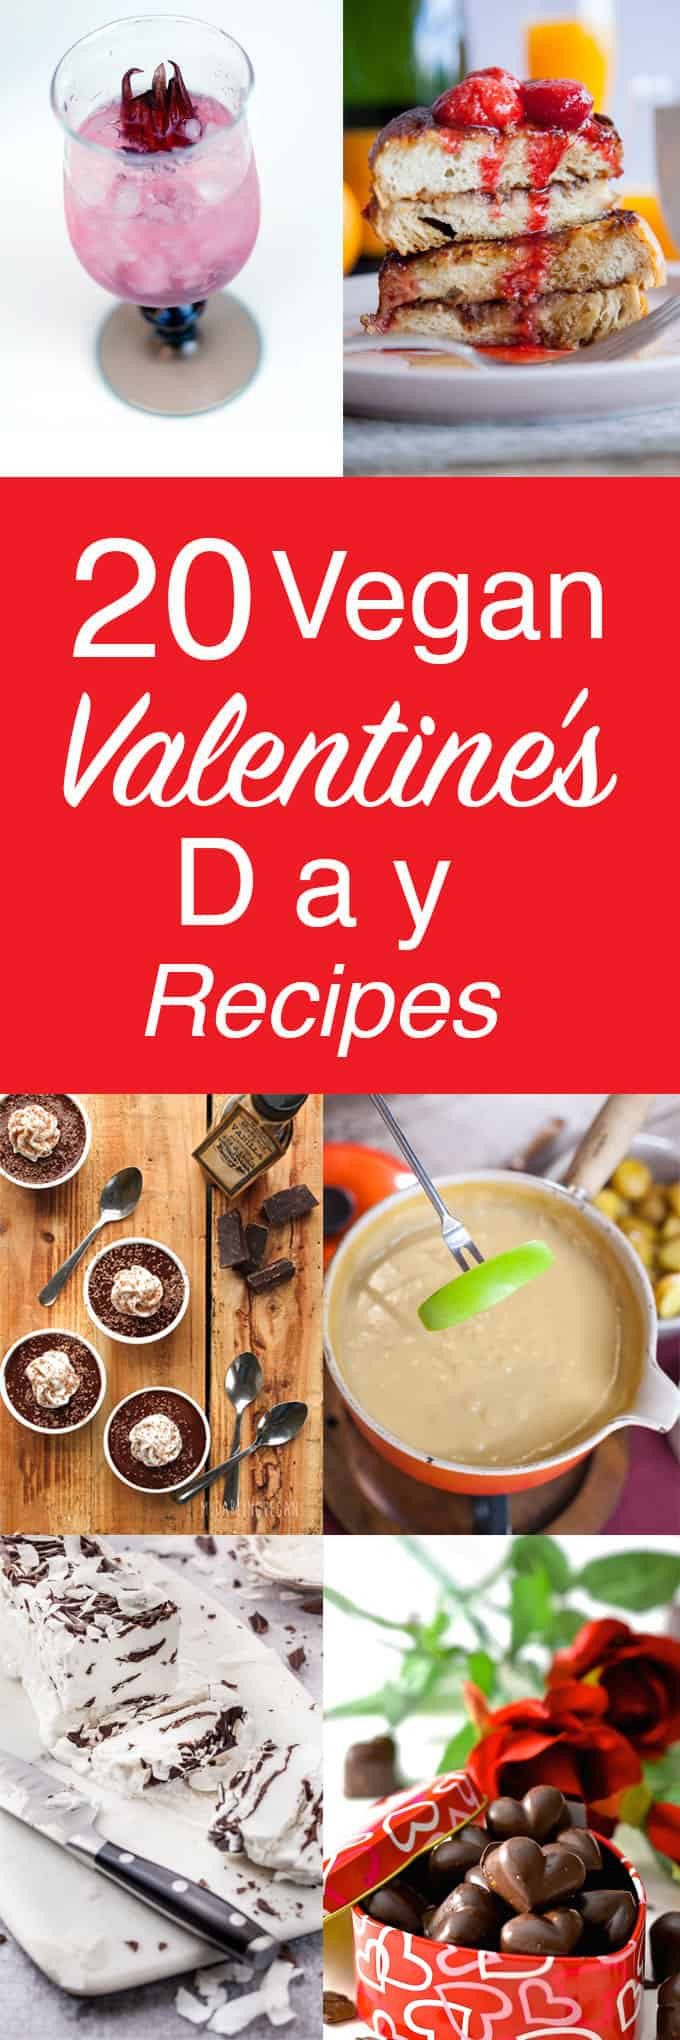 Vegan Valentine Recipes
 20 Vegan Valentine s Day Recipes